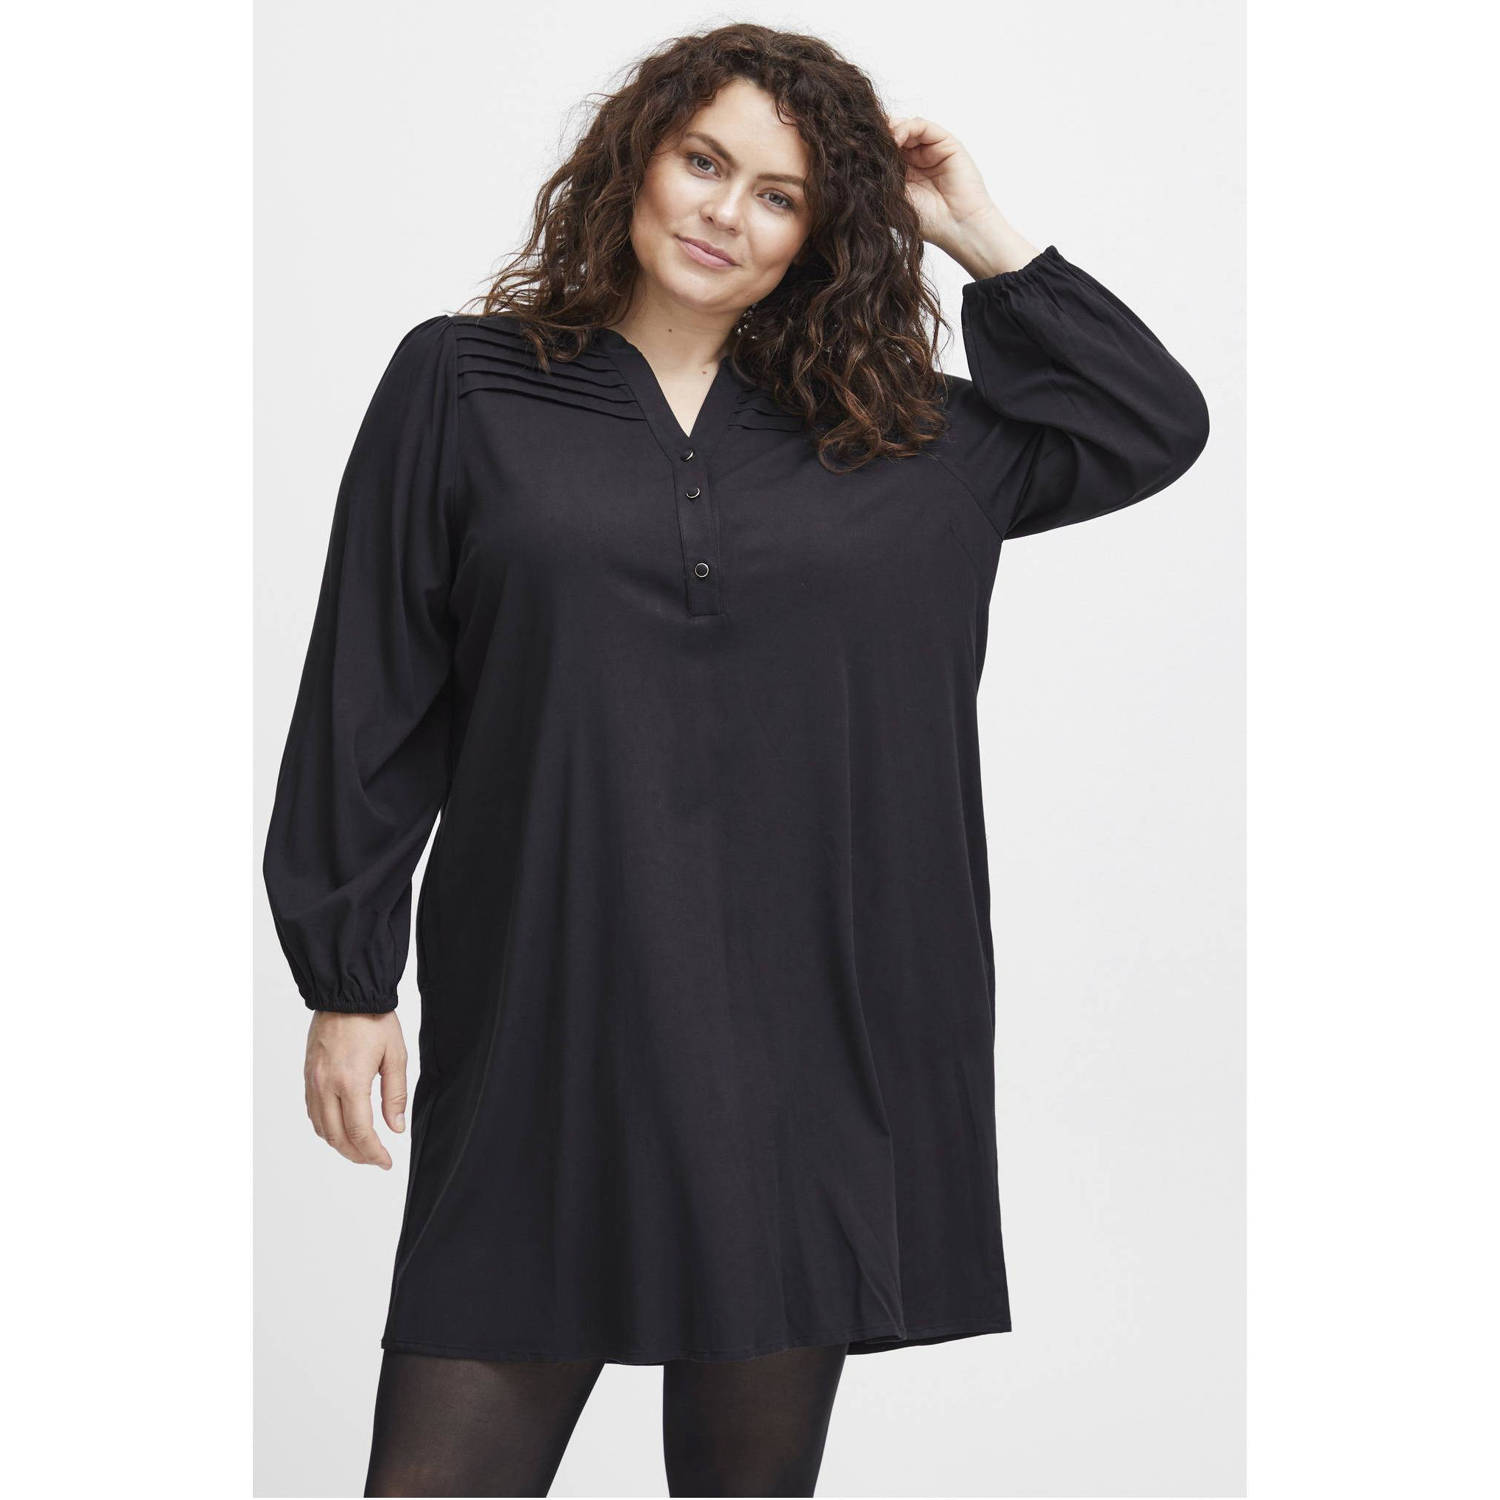 Fransa Plus Size Selection jurk zwart